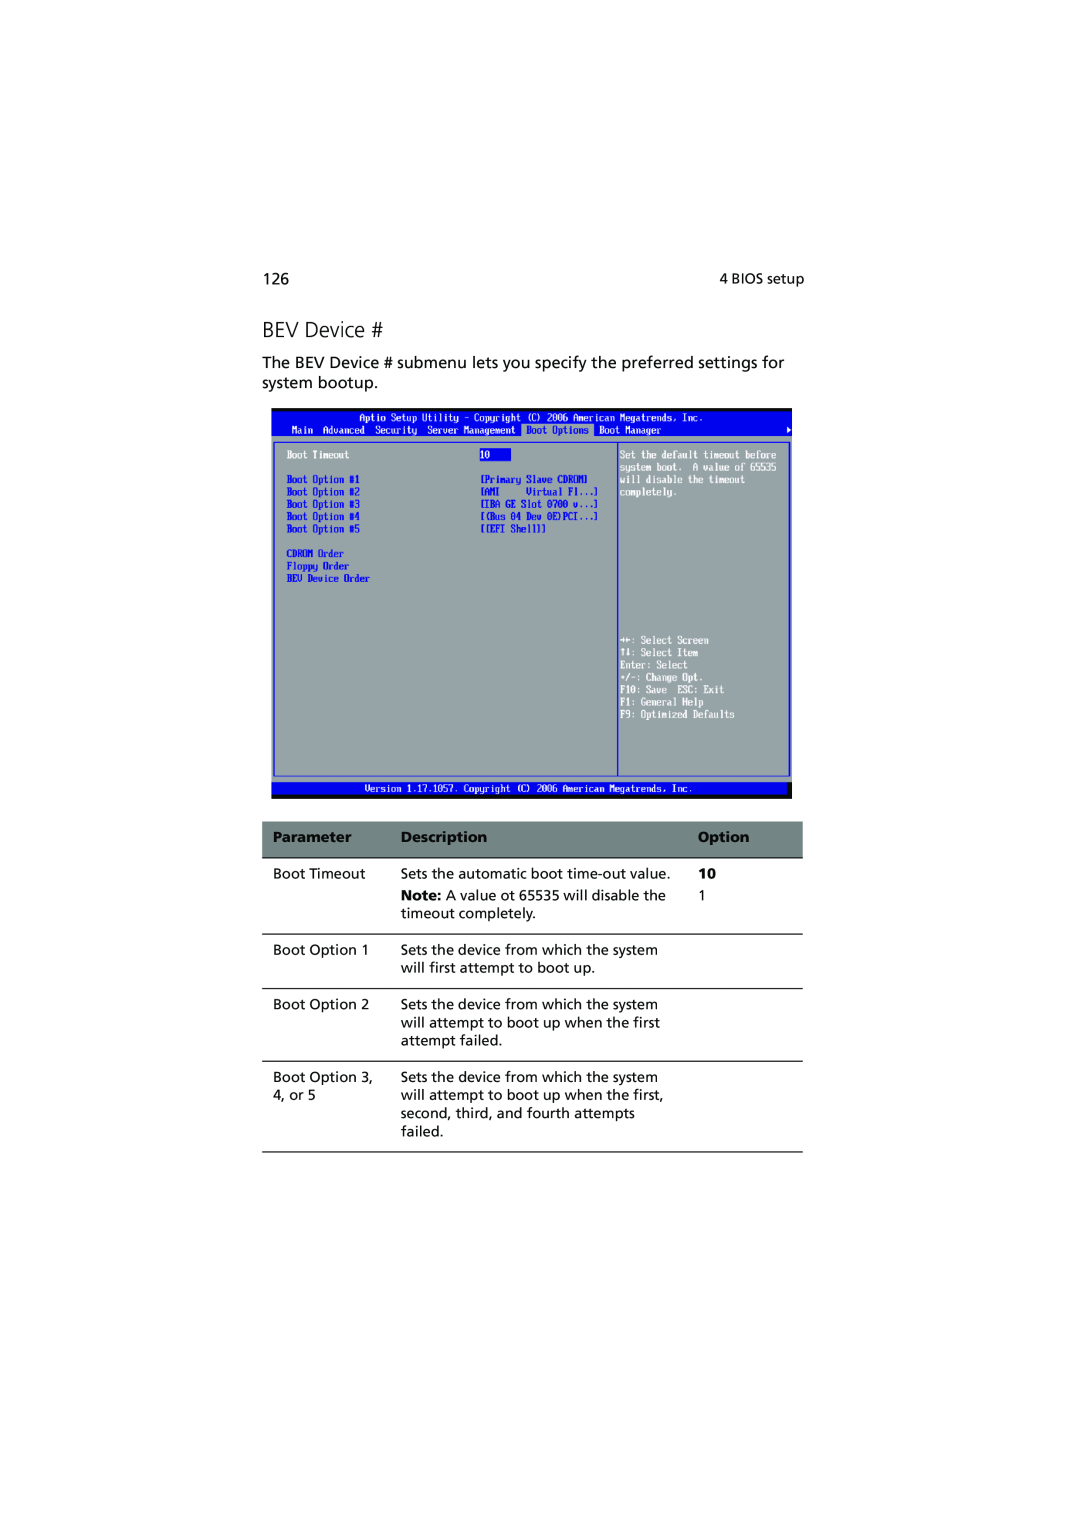 Acer R720 Series manual BEV Device #, Parameter, Description, Option 